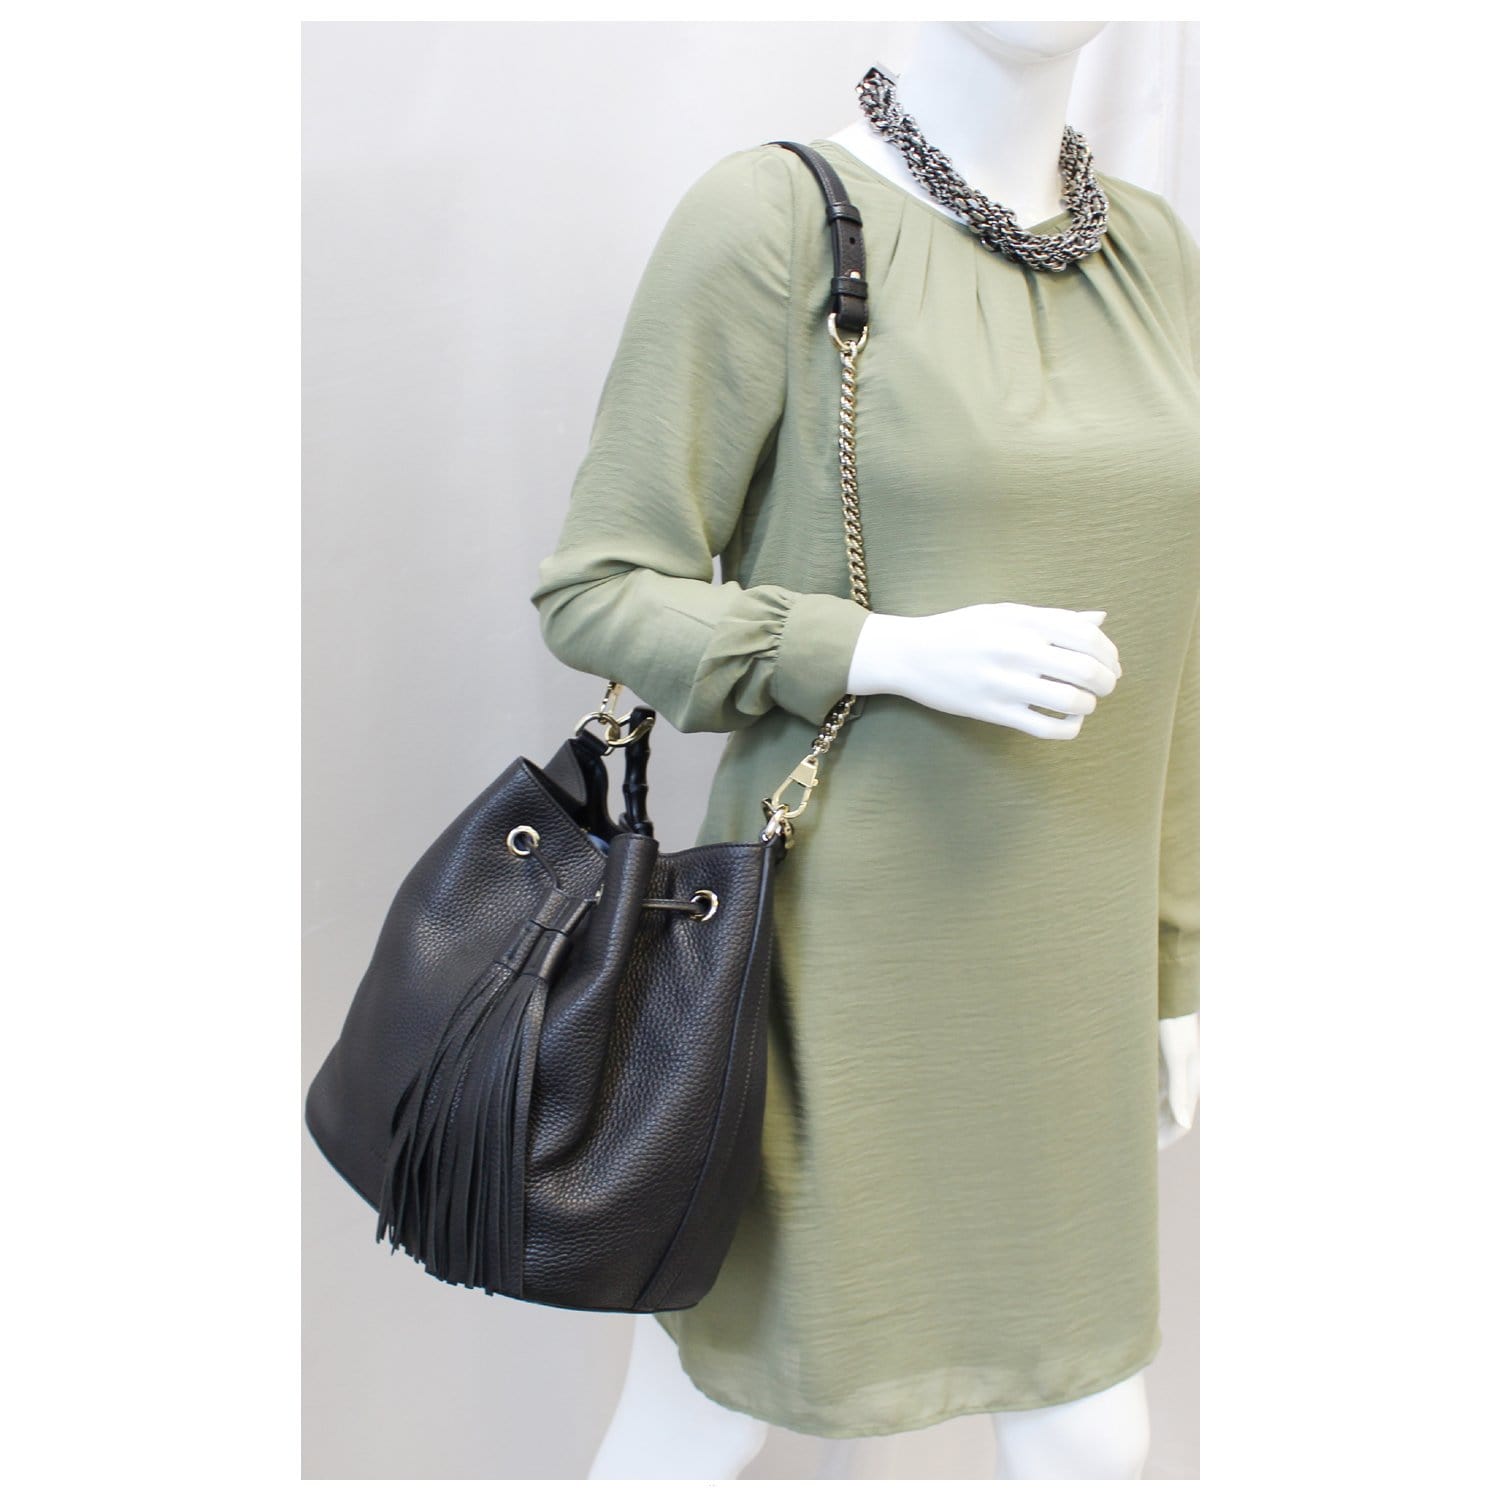 $1400 GUCCI Sm. Miss Bamboo Handbag Leather NEW